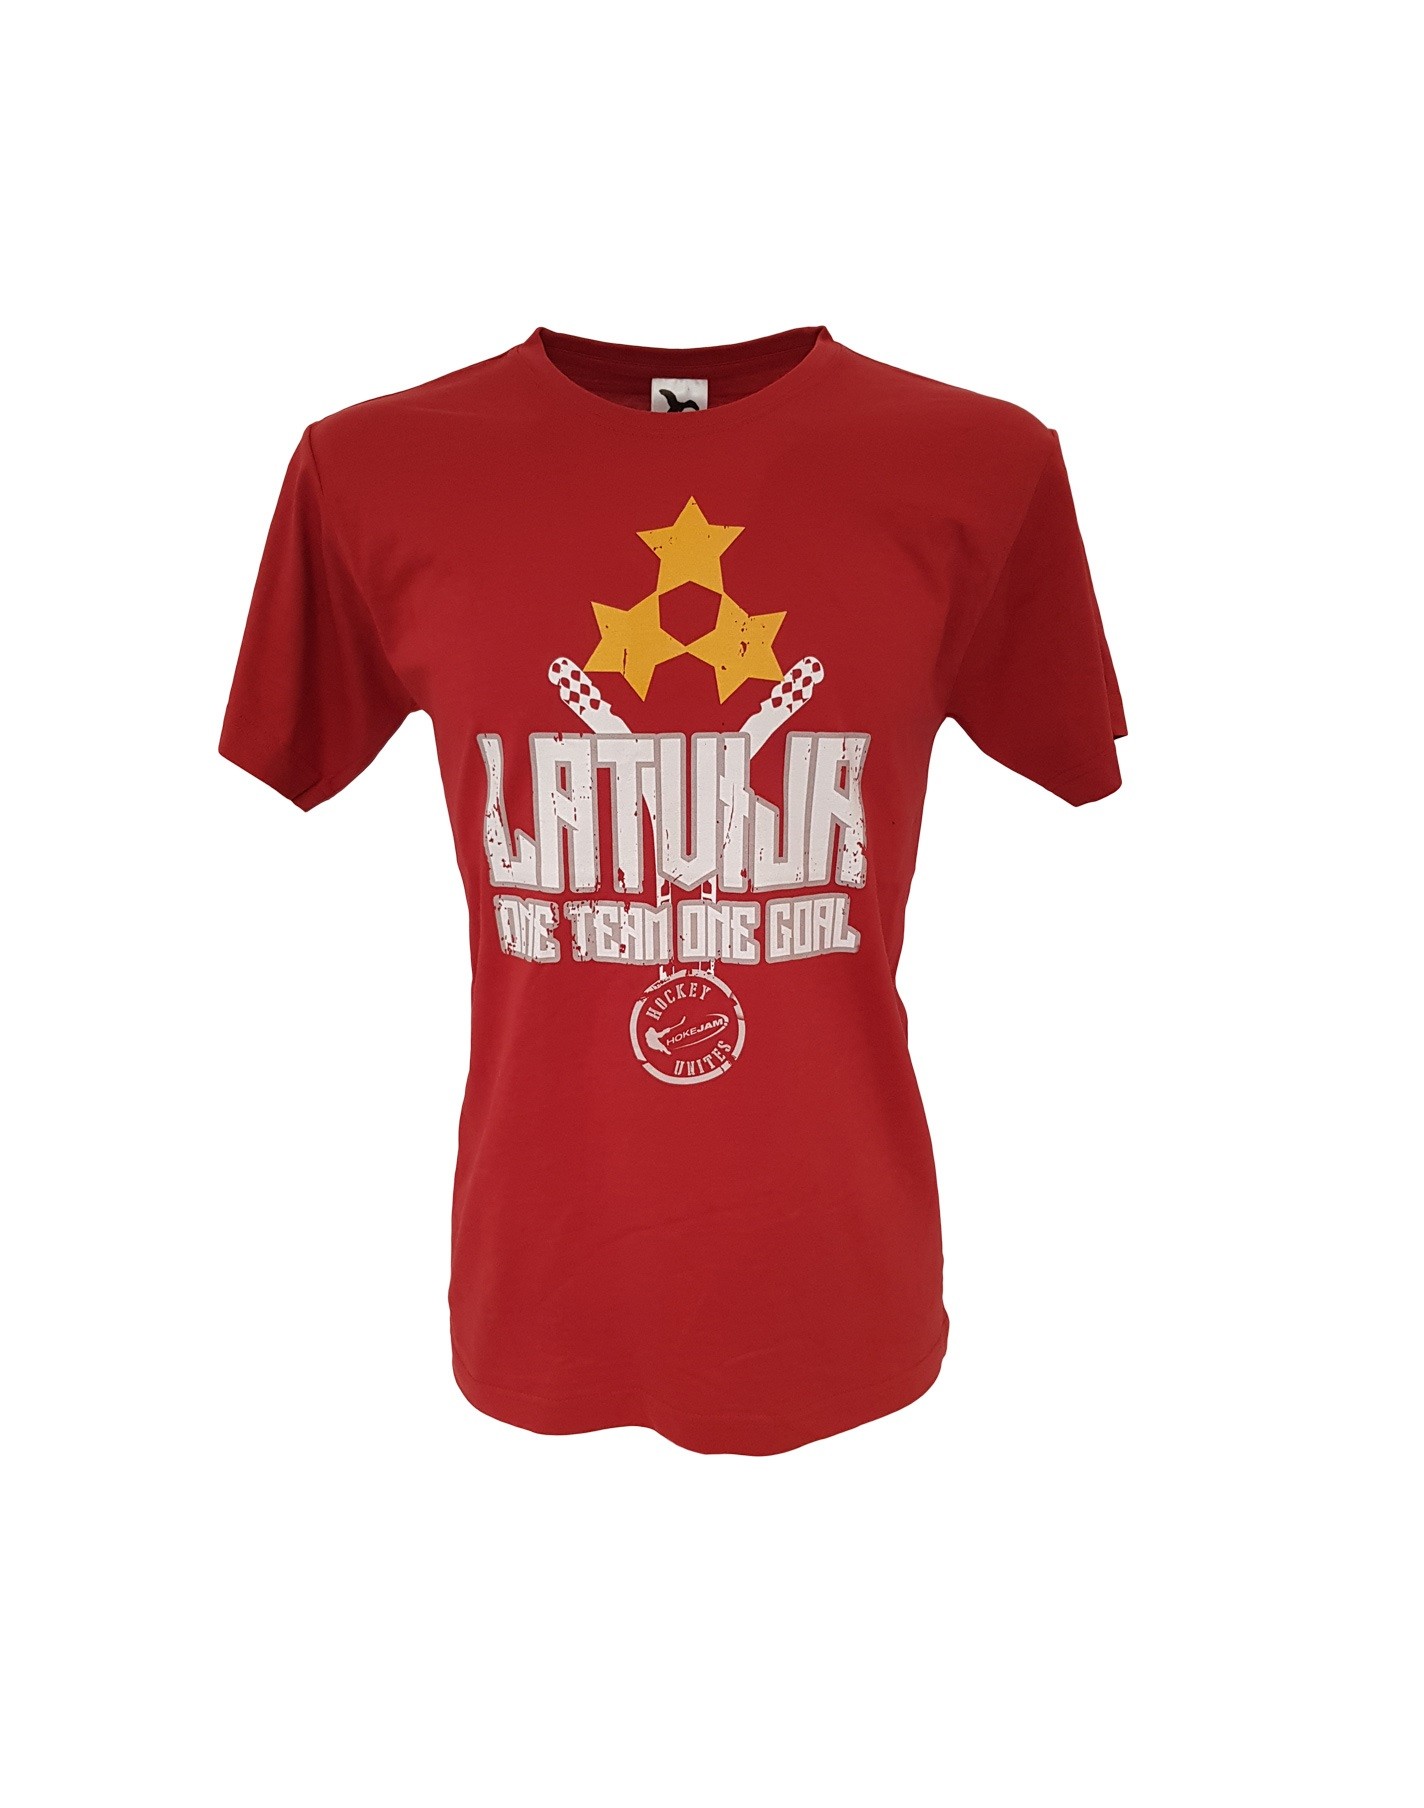 HOKEJAM.LV Latvija One Team One Goal Youth T-Shirt